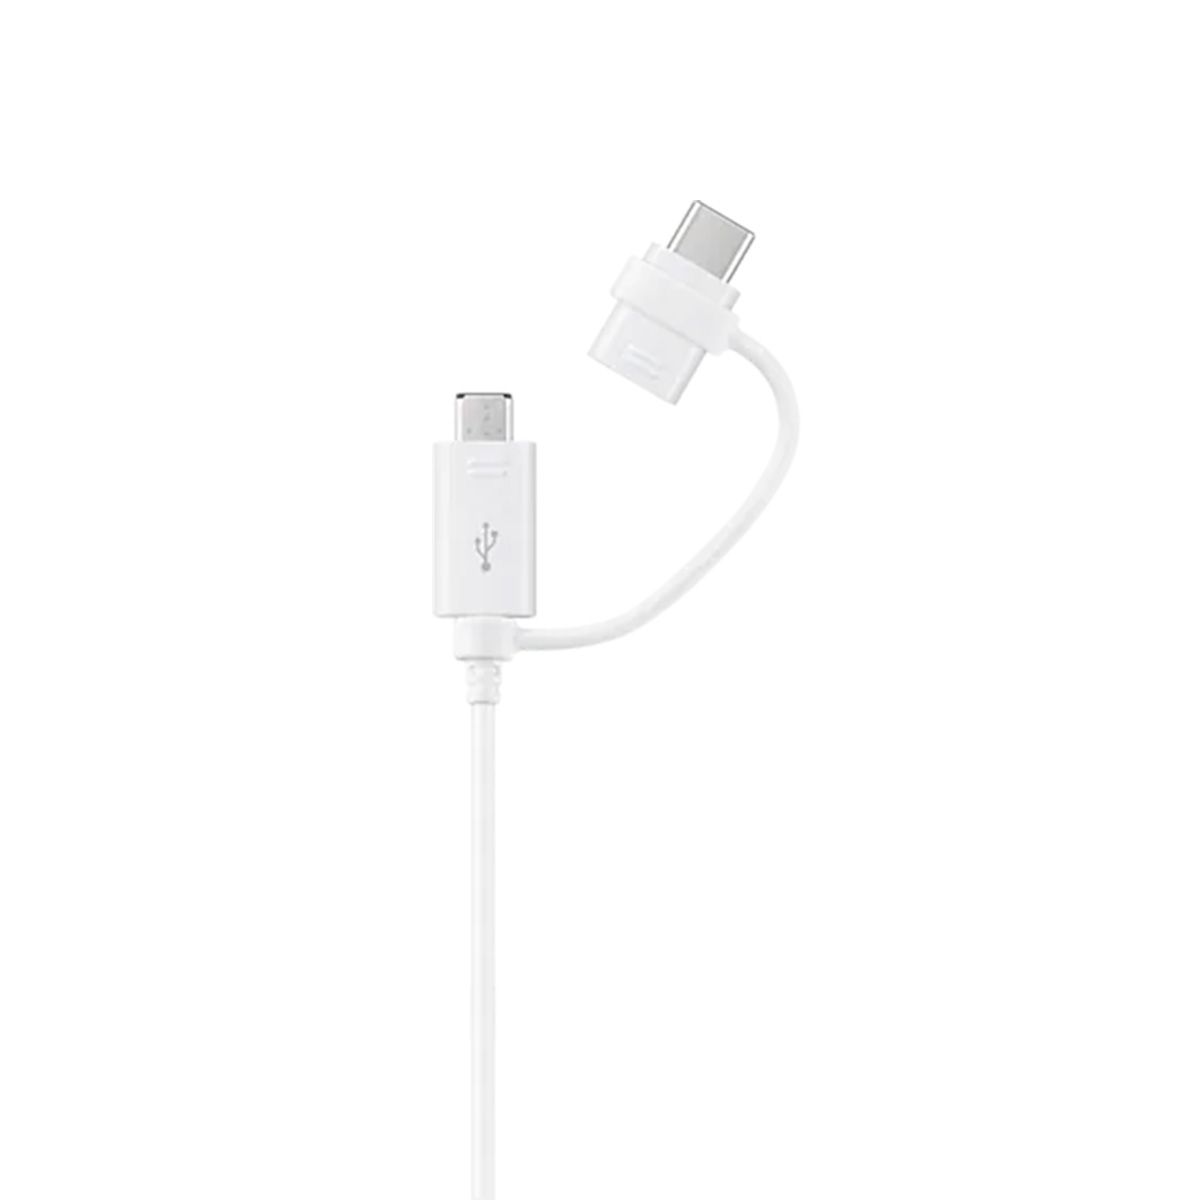 Samsung USB Combo Cable Type-C & Micro USB (EP-DG930DWEGWW) - White